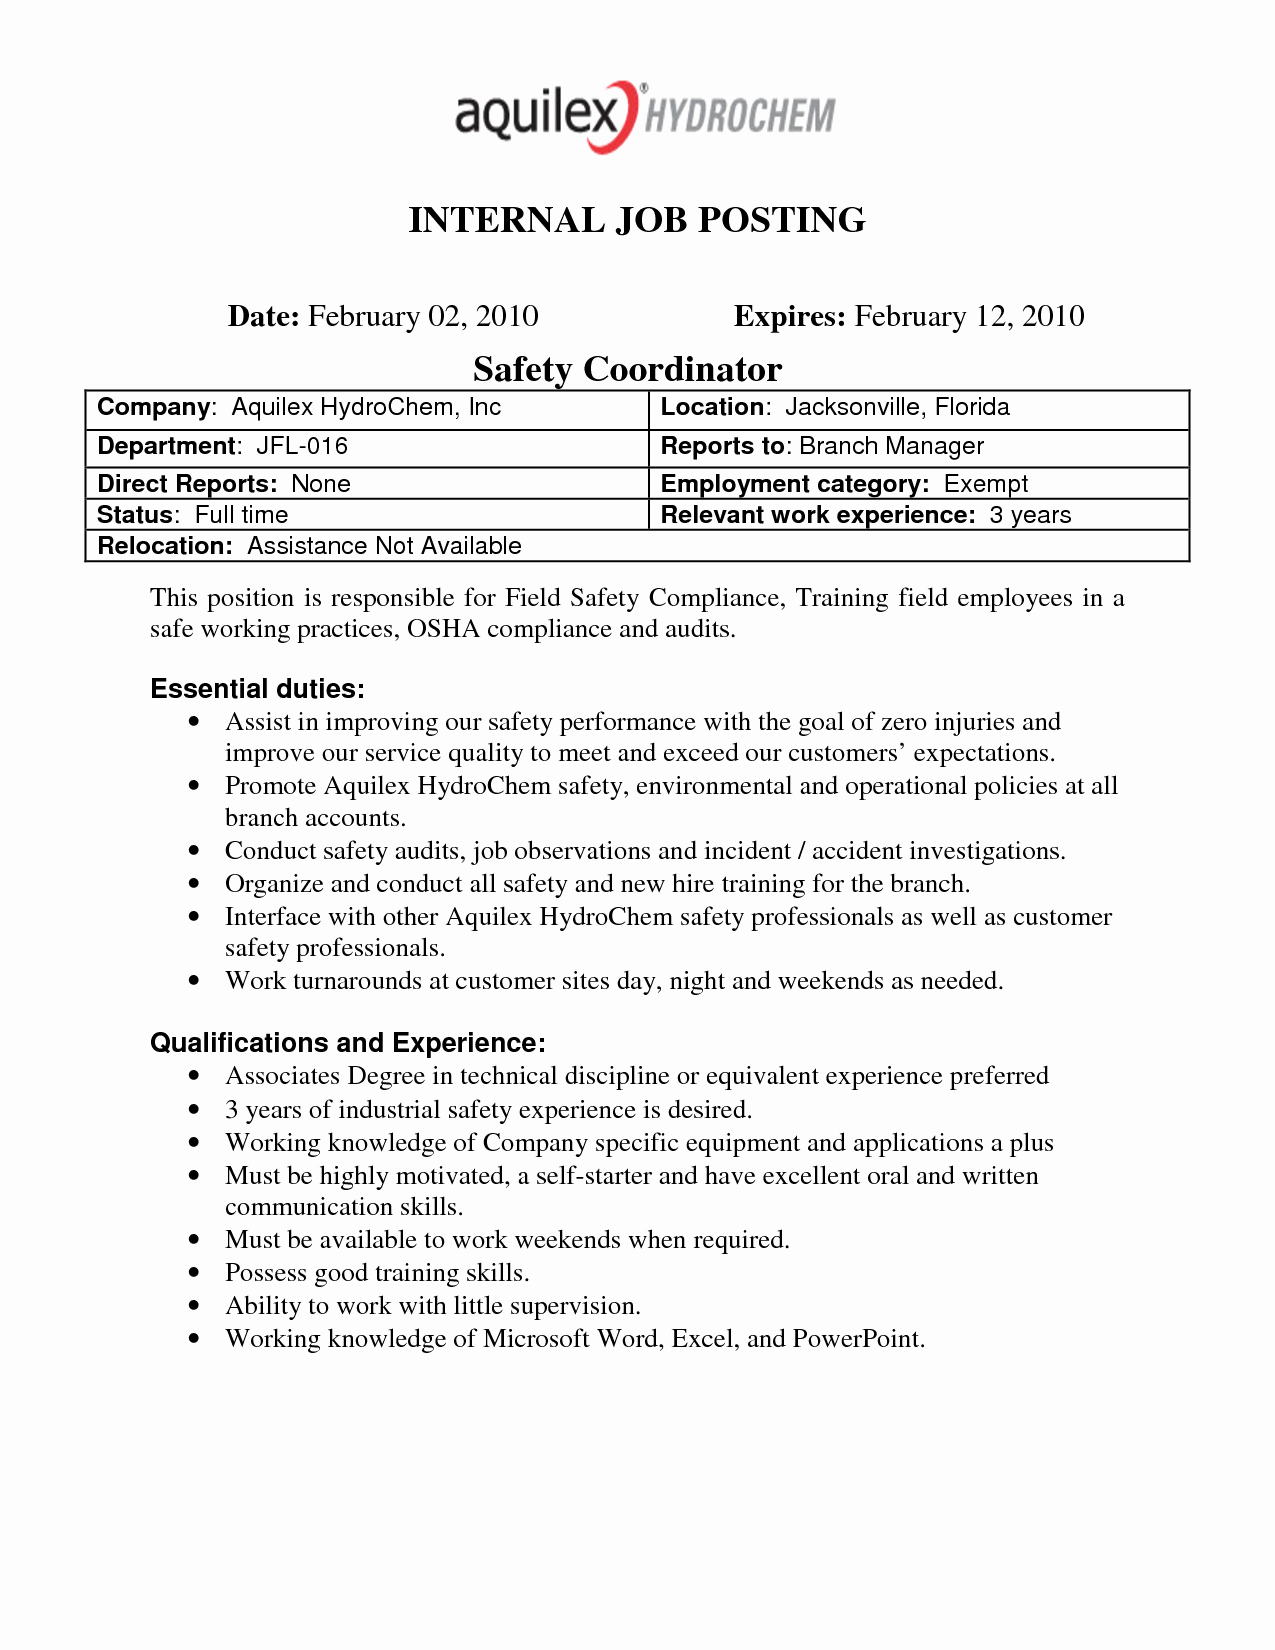 Job Posting Template Word Inspirational Best S Of Internal Job Posting Template Word Resume